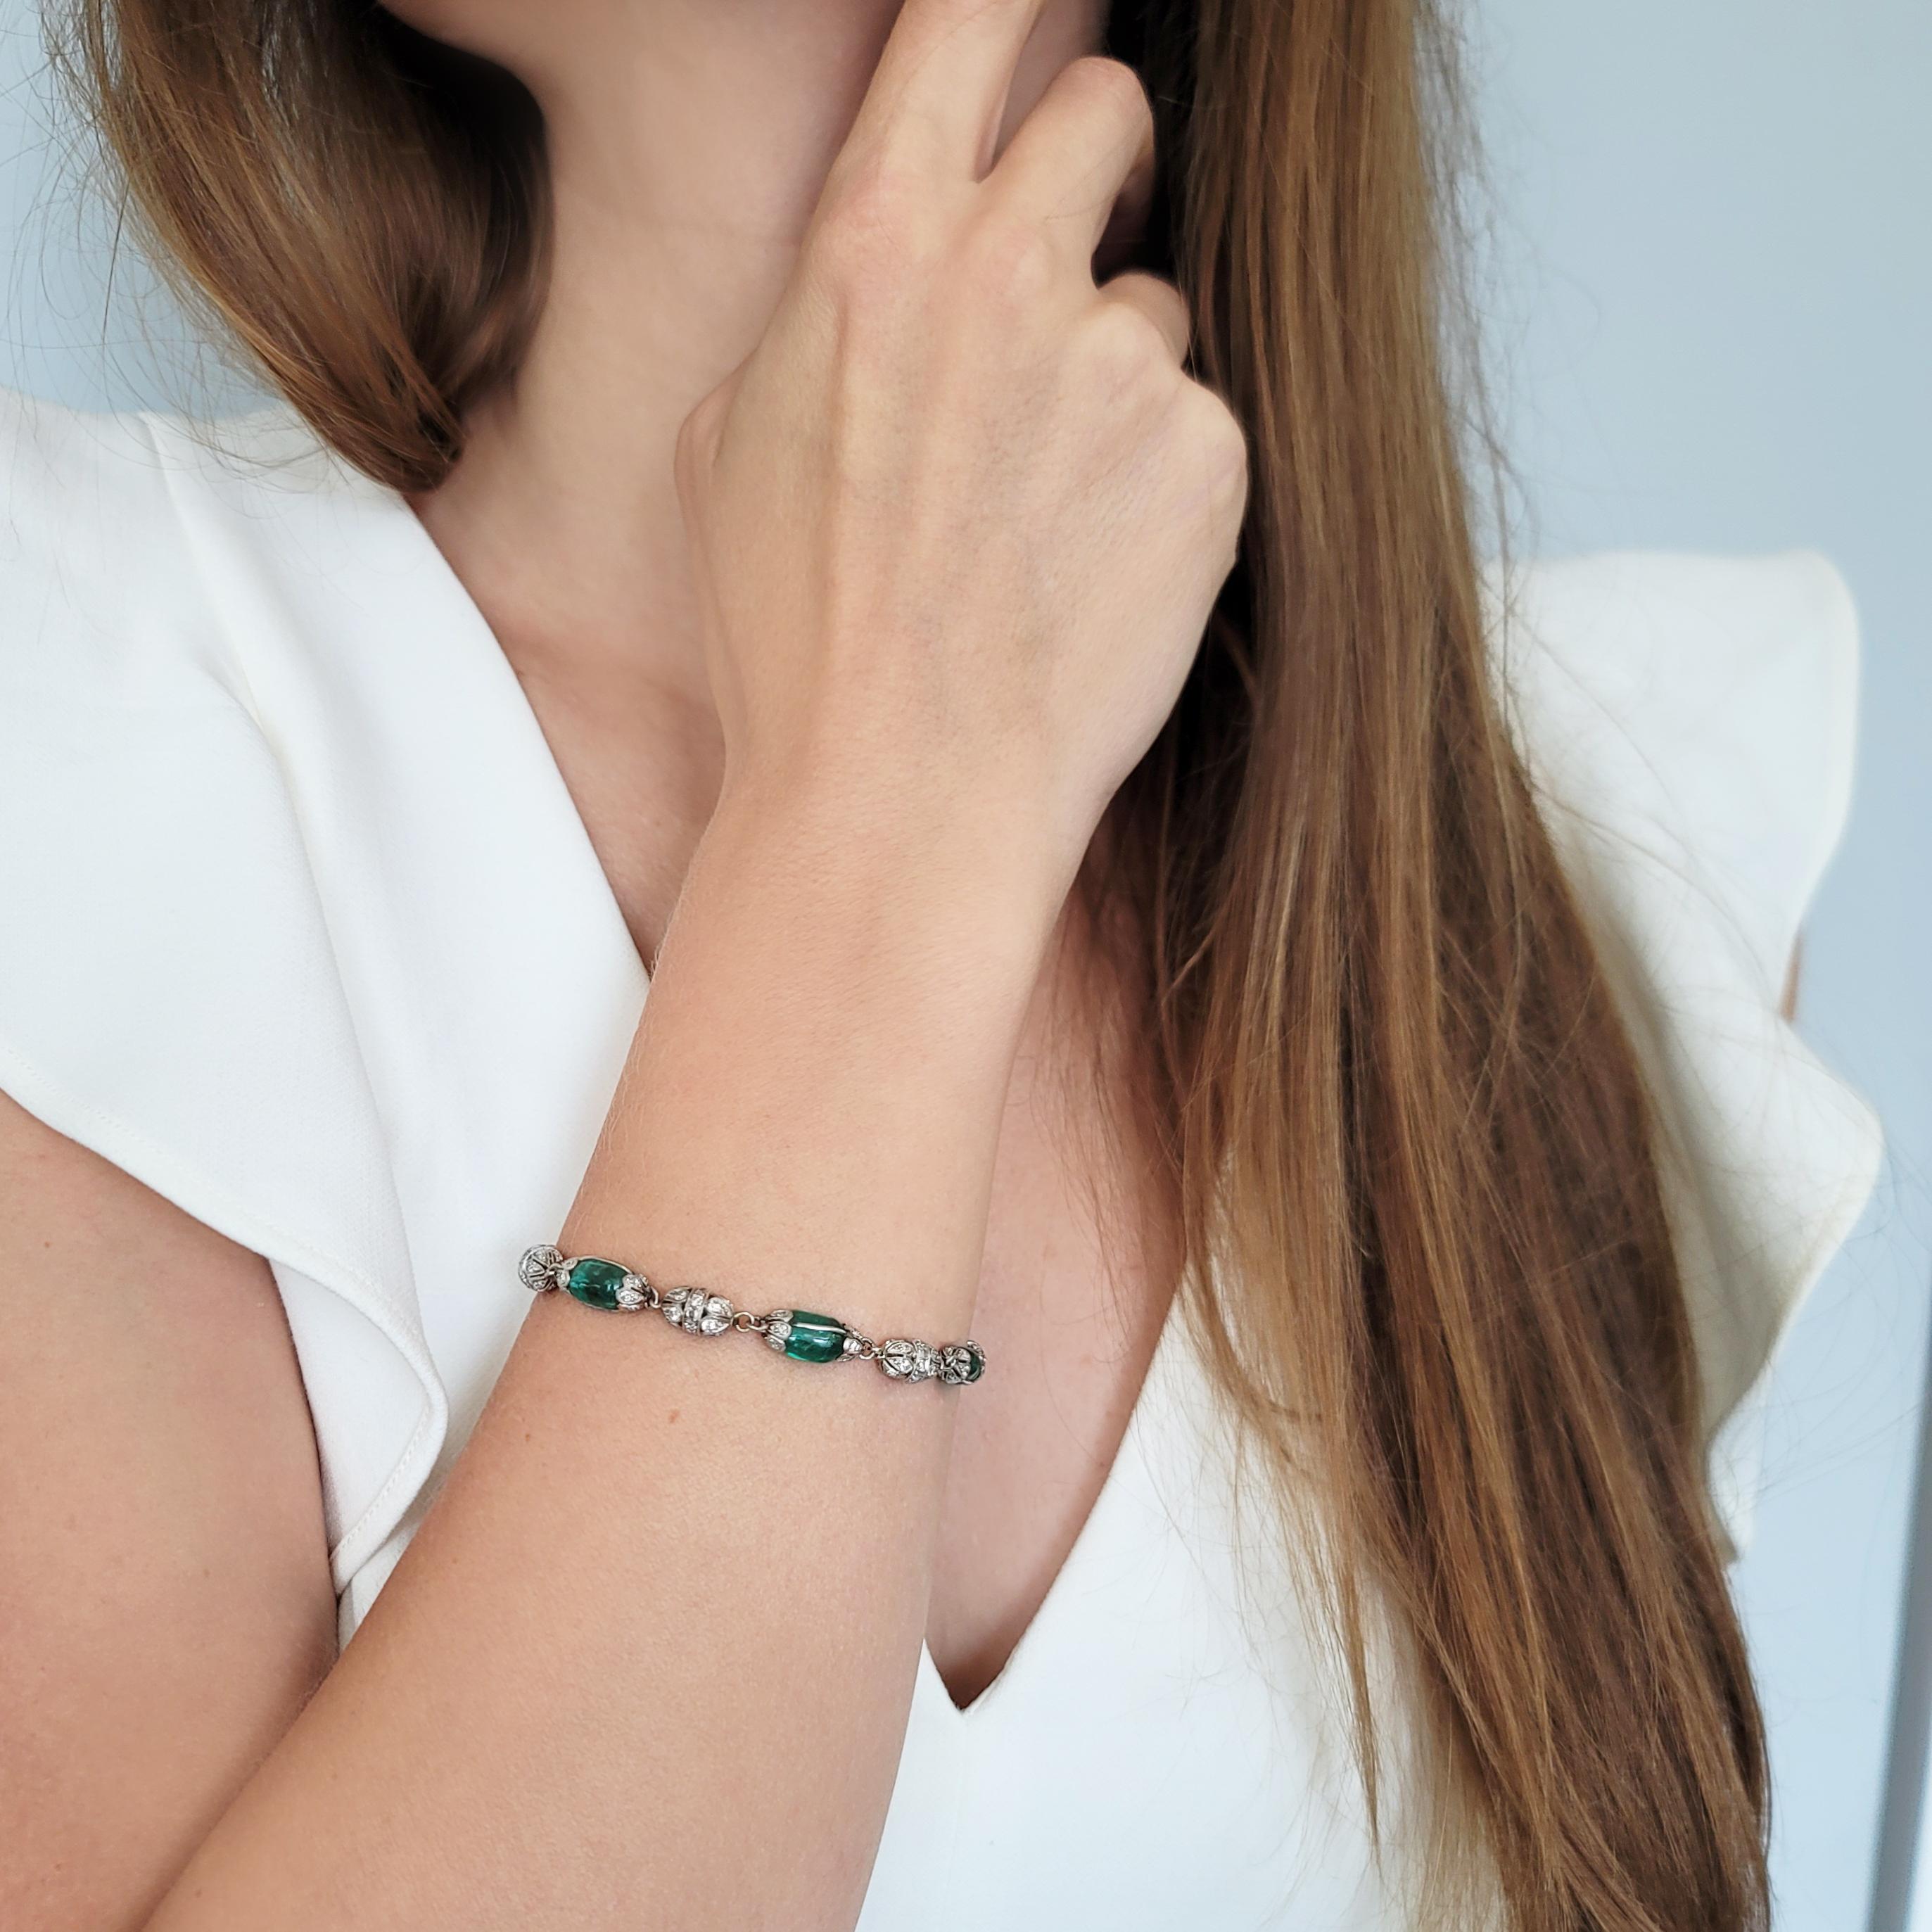 emerald beads bracelet